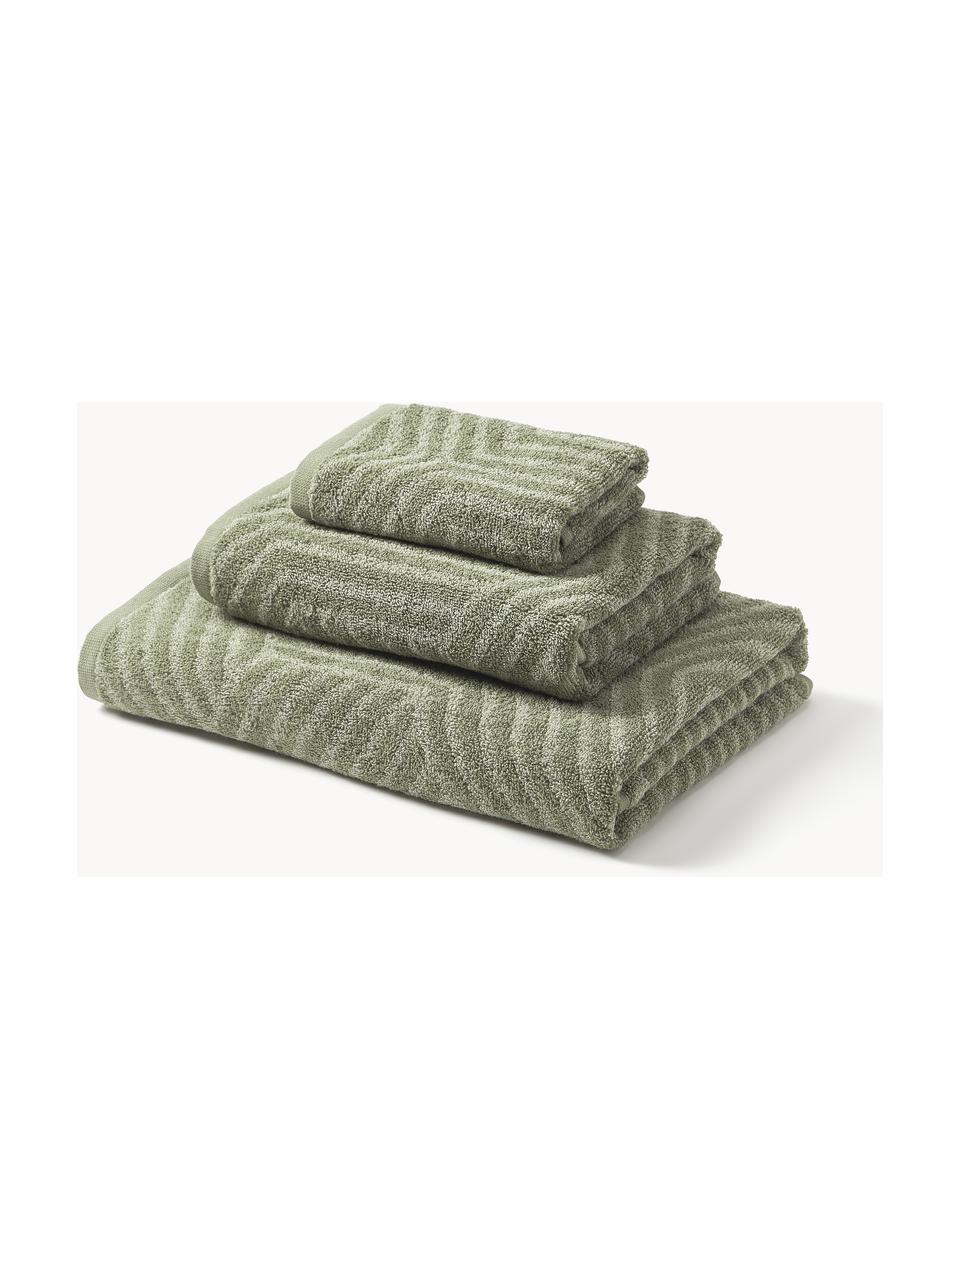 Set de toallas Fatu, tamaños diferentes, Tonos de verde oliva, Set de 3 (toalla tocador, toalla lavabo y toalla de ducha)